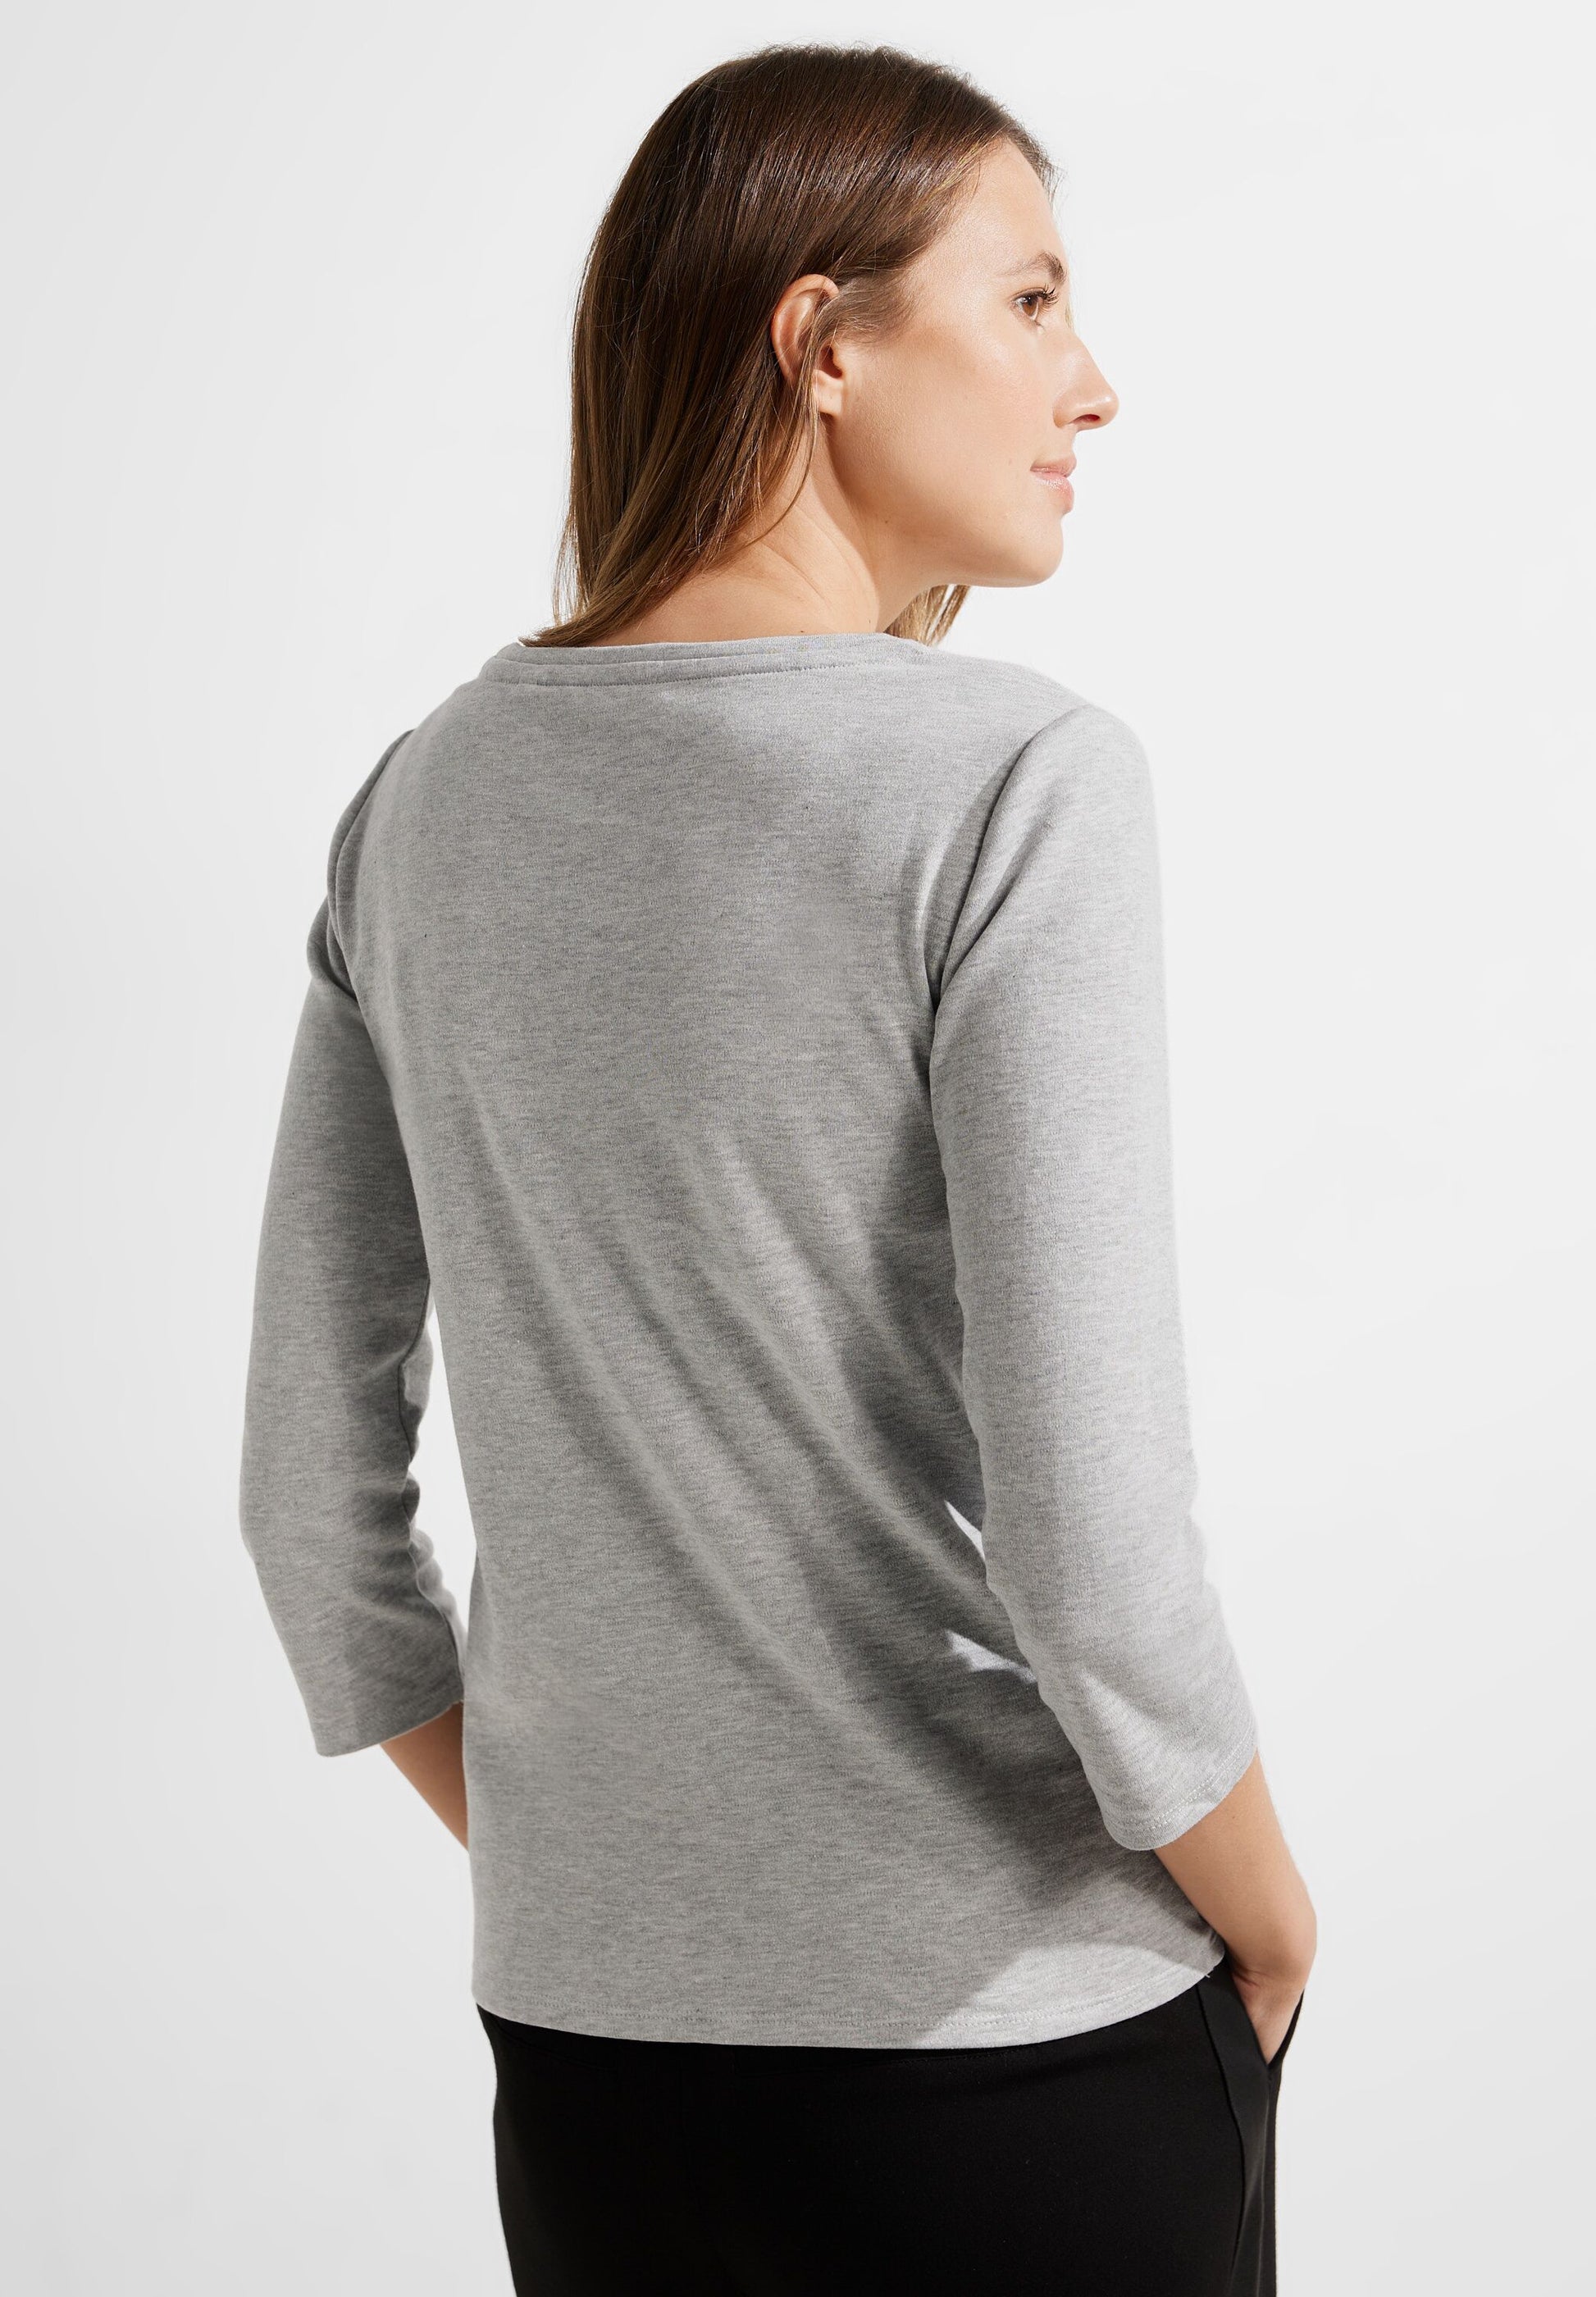 CECIL - Basic Shirt in TWISTY melange – grey - Farbe: Unifarbe Mode